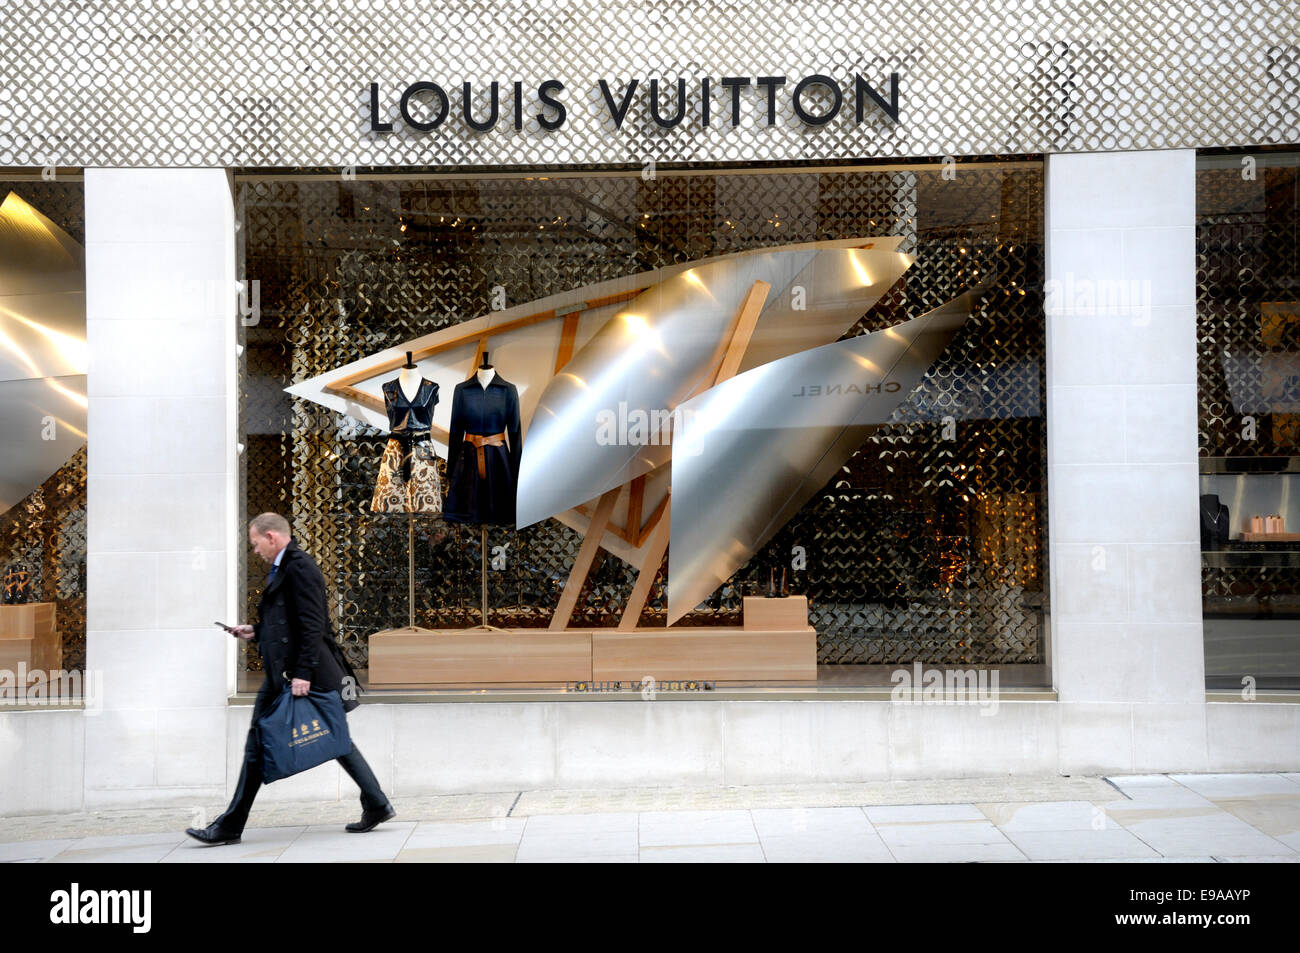 London July 2019 Louis Vuitton Store Stock Photo 1461734174